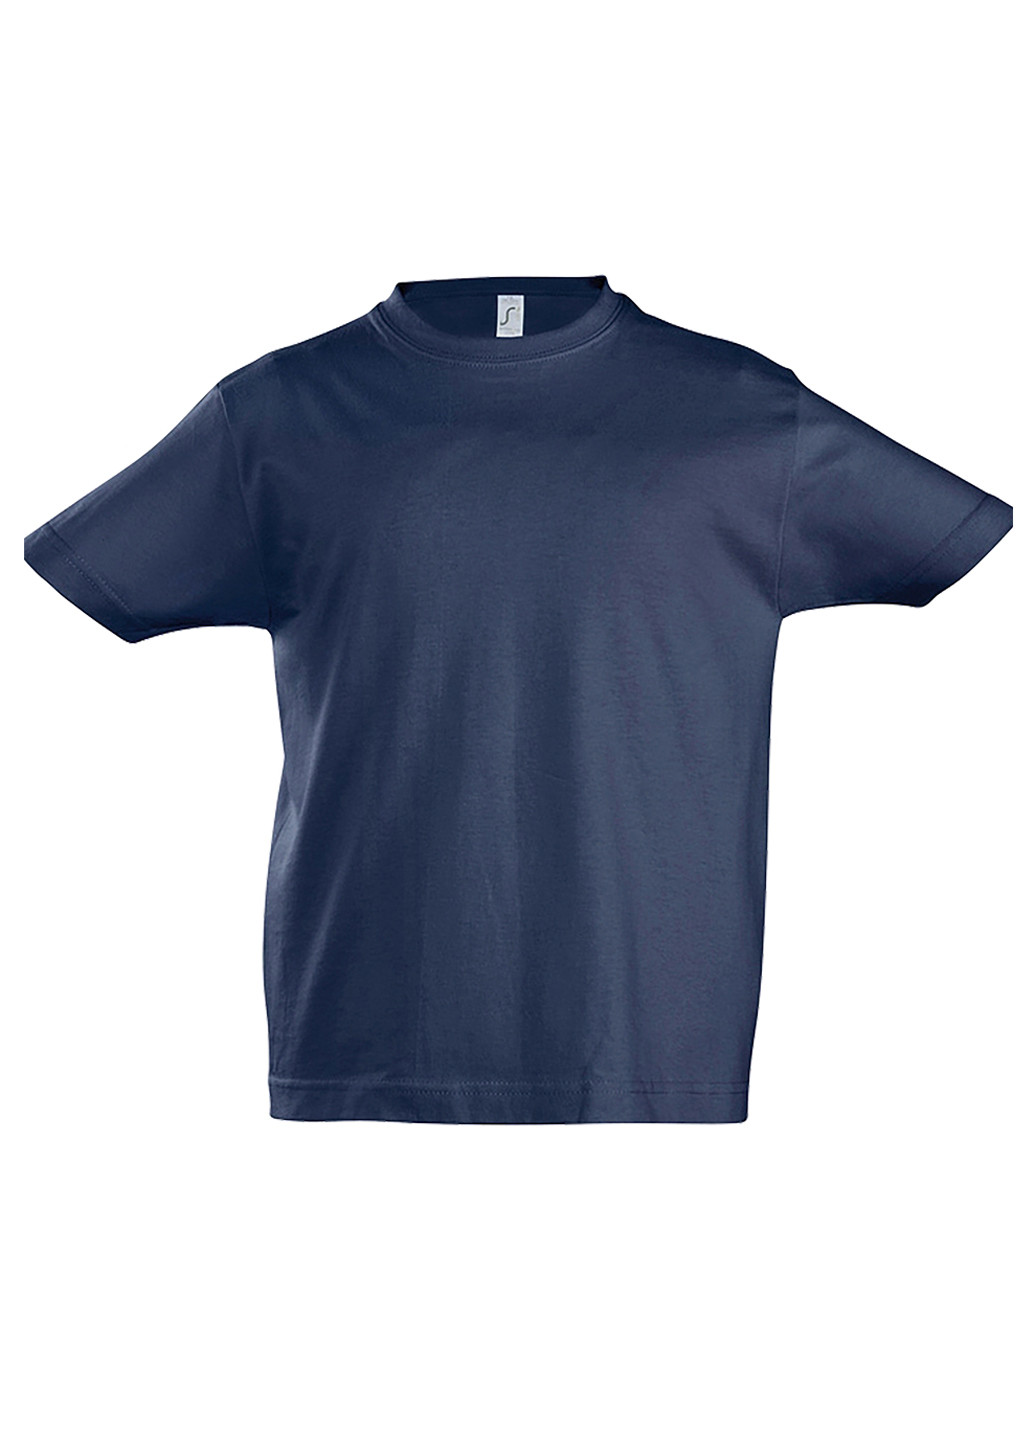 Темно-синяя летняя футболка с коротким рукавом Sol's